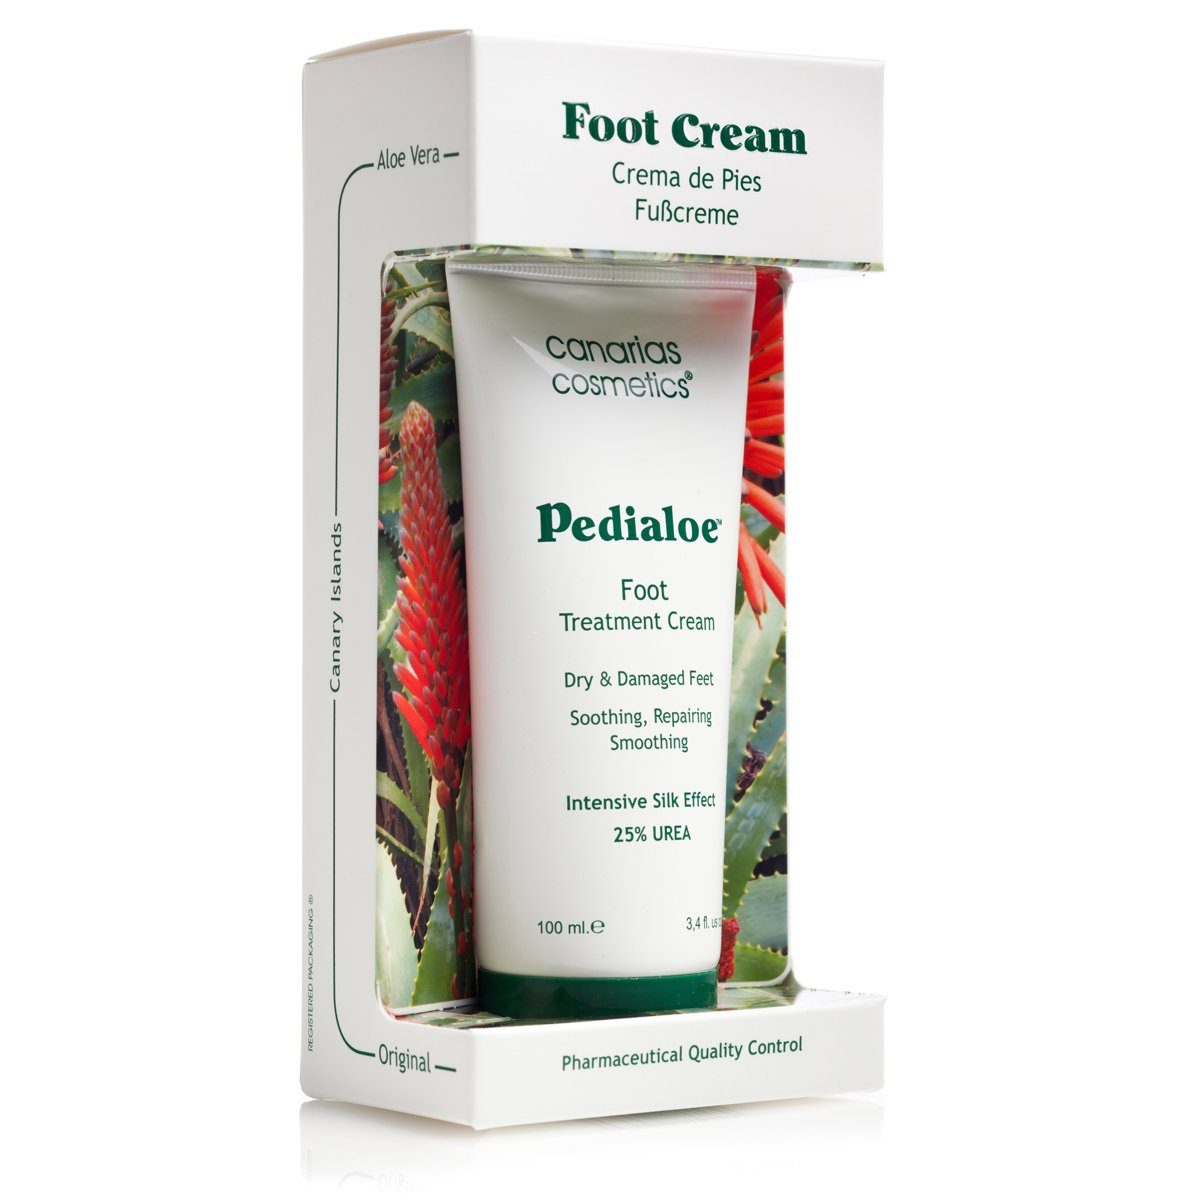 Foot ml) cosmetics Pedialoe Cream Treatment canarias (100 Fußcreme